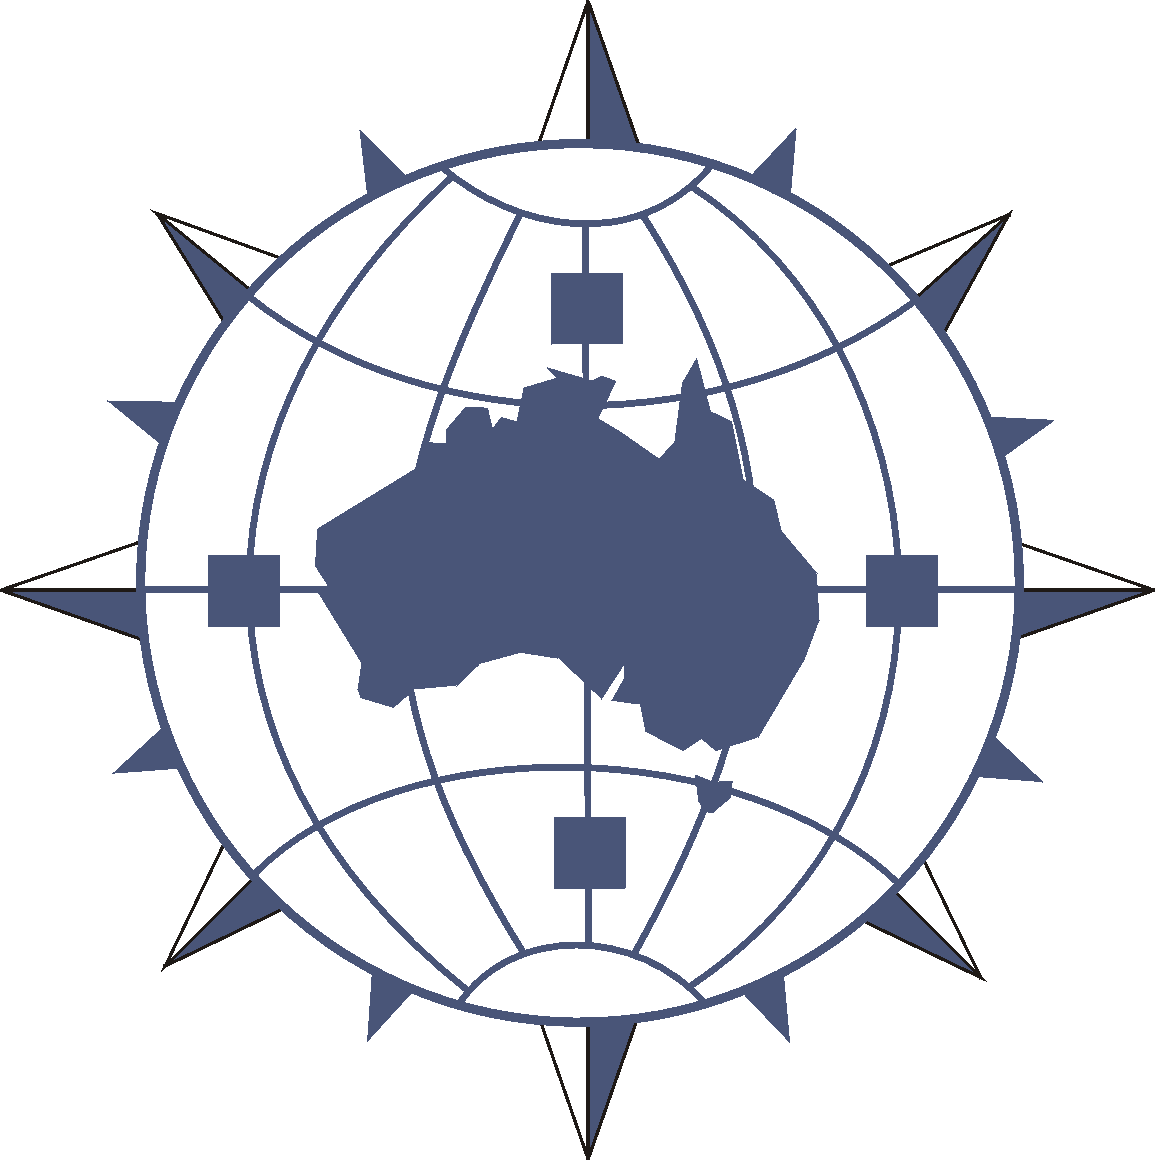 Australian Society of Exploration Geophysicists